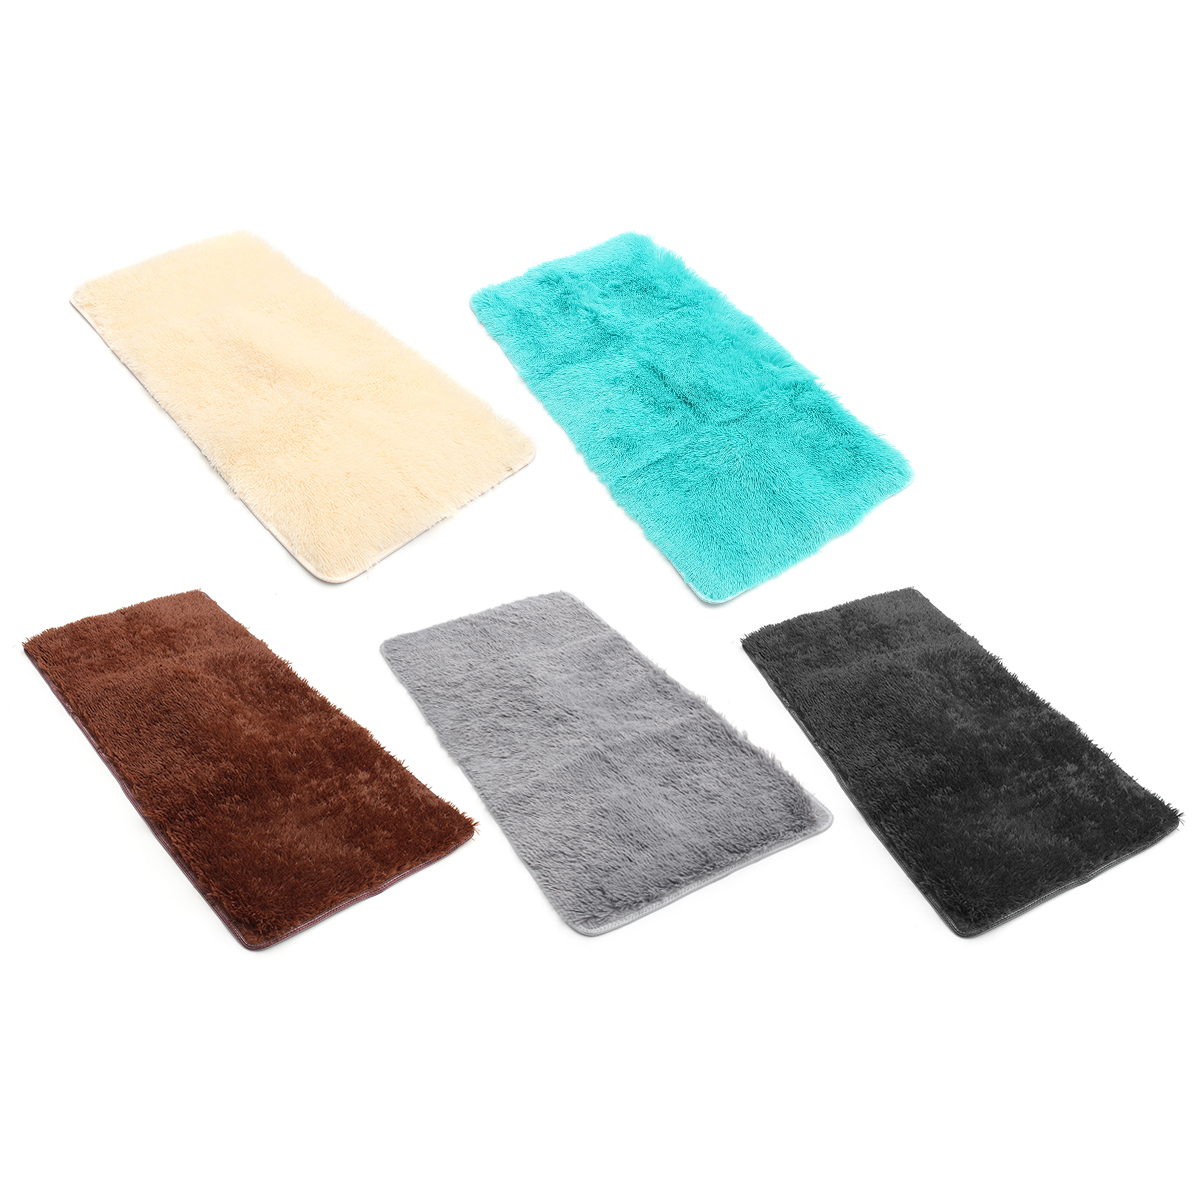 Soft-Fluffy-Rugs-Anti-Skid-Shaggy-Area-Rug-Home-Bedroom-Floor-Area-Carpet-1604512-2